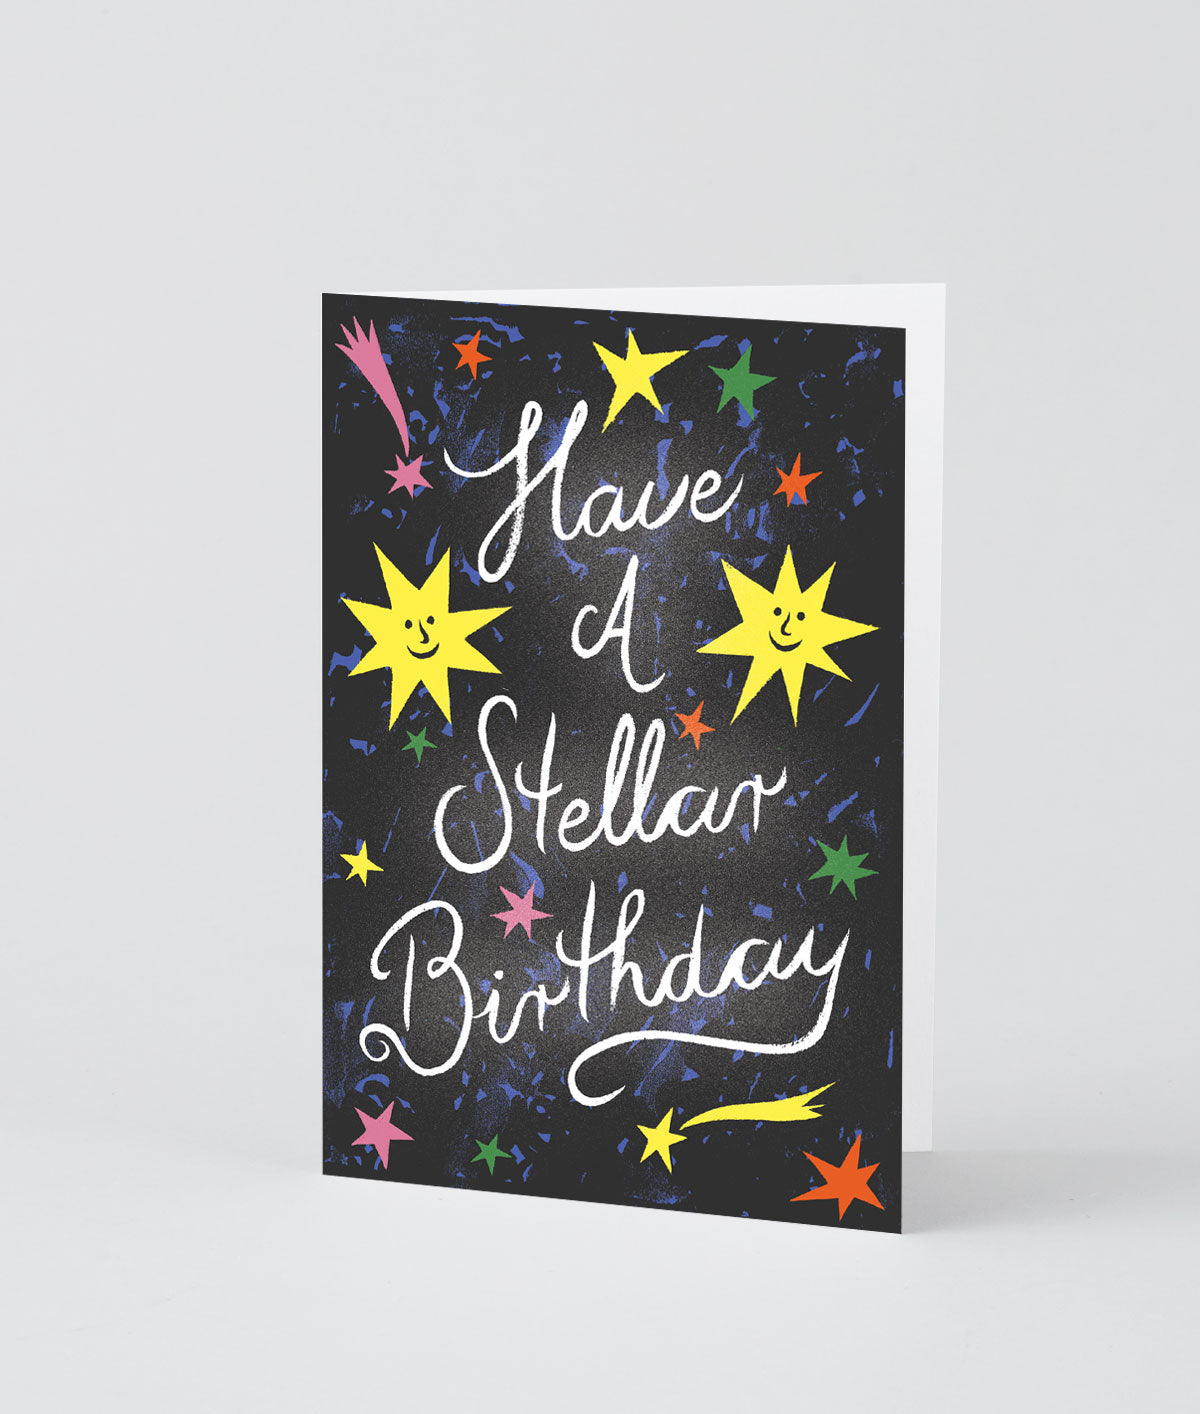 Have a Stellar Birthday